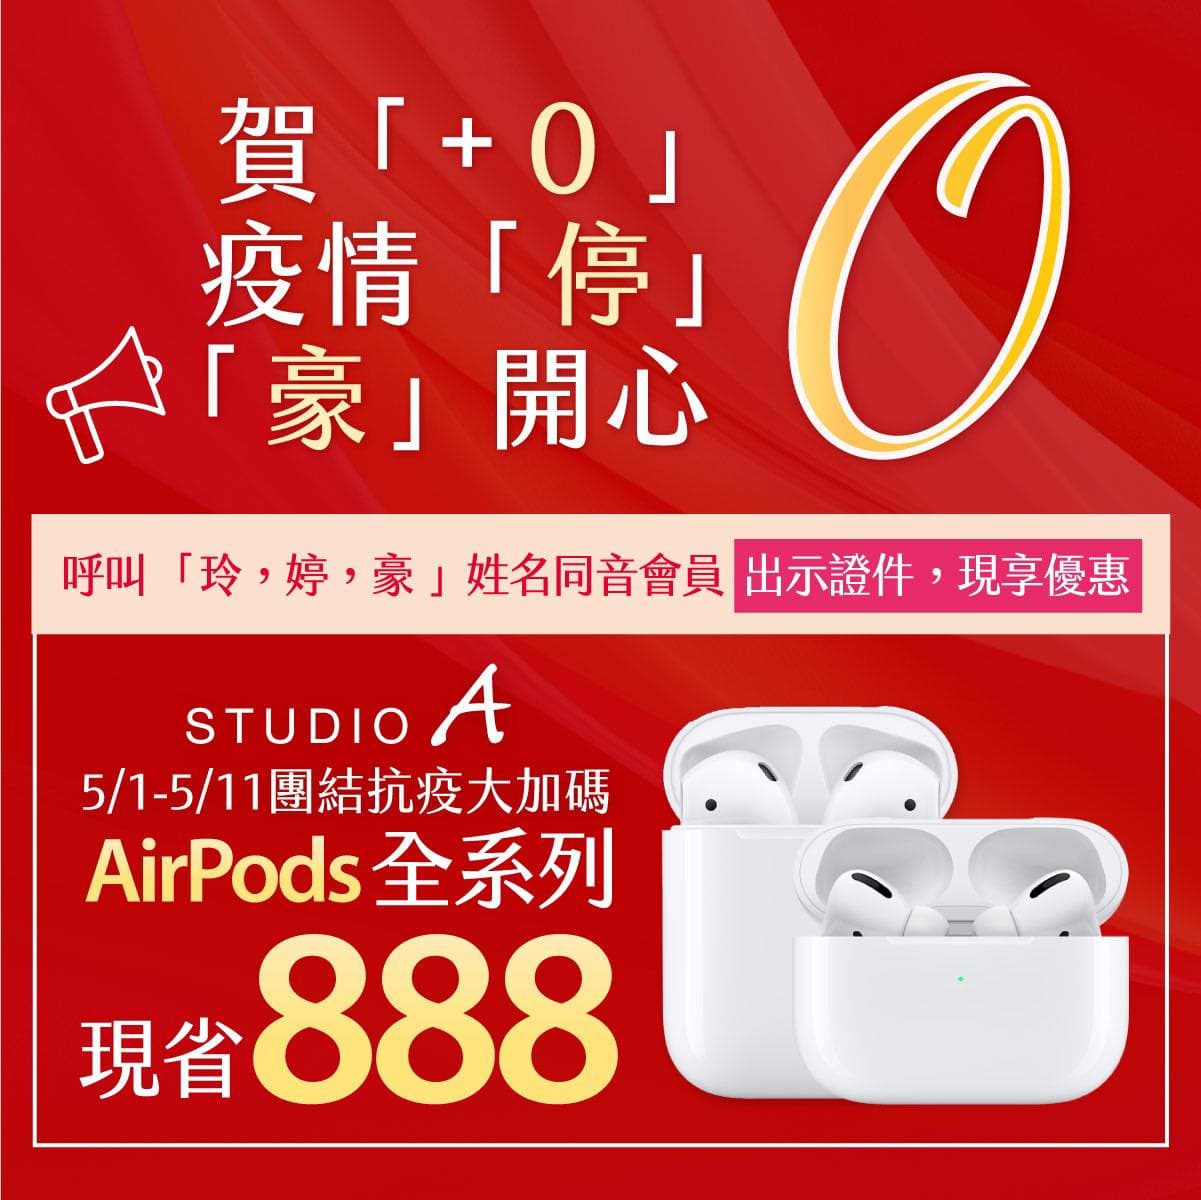 Studio A慶祝零確診「玲、婷、豪」買AirPods現省888元